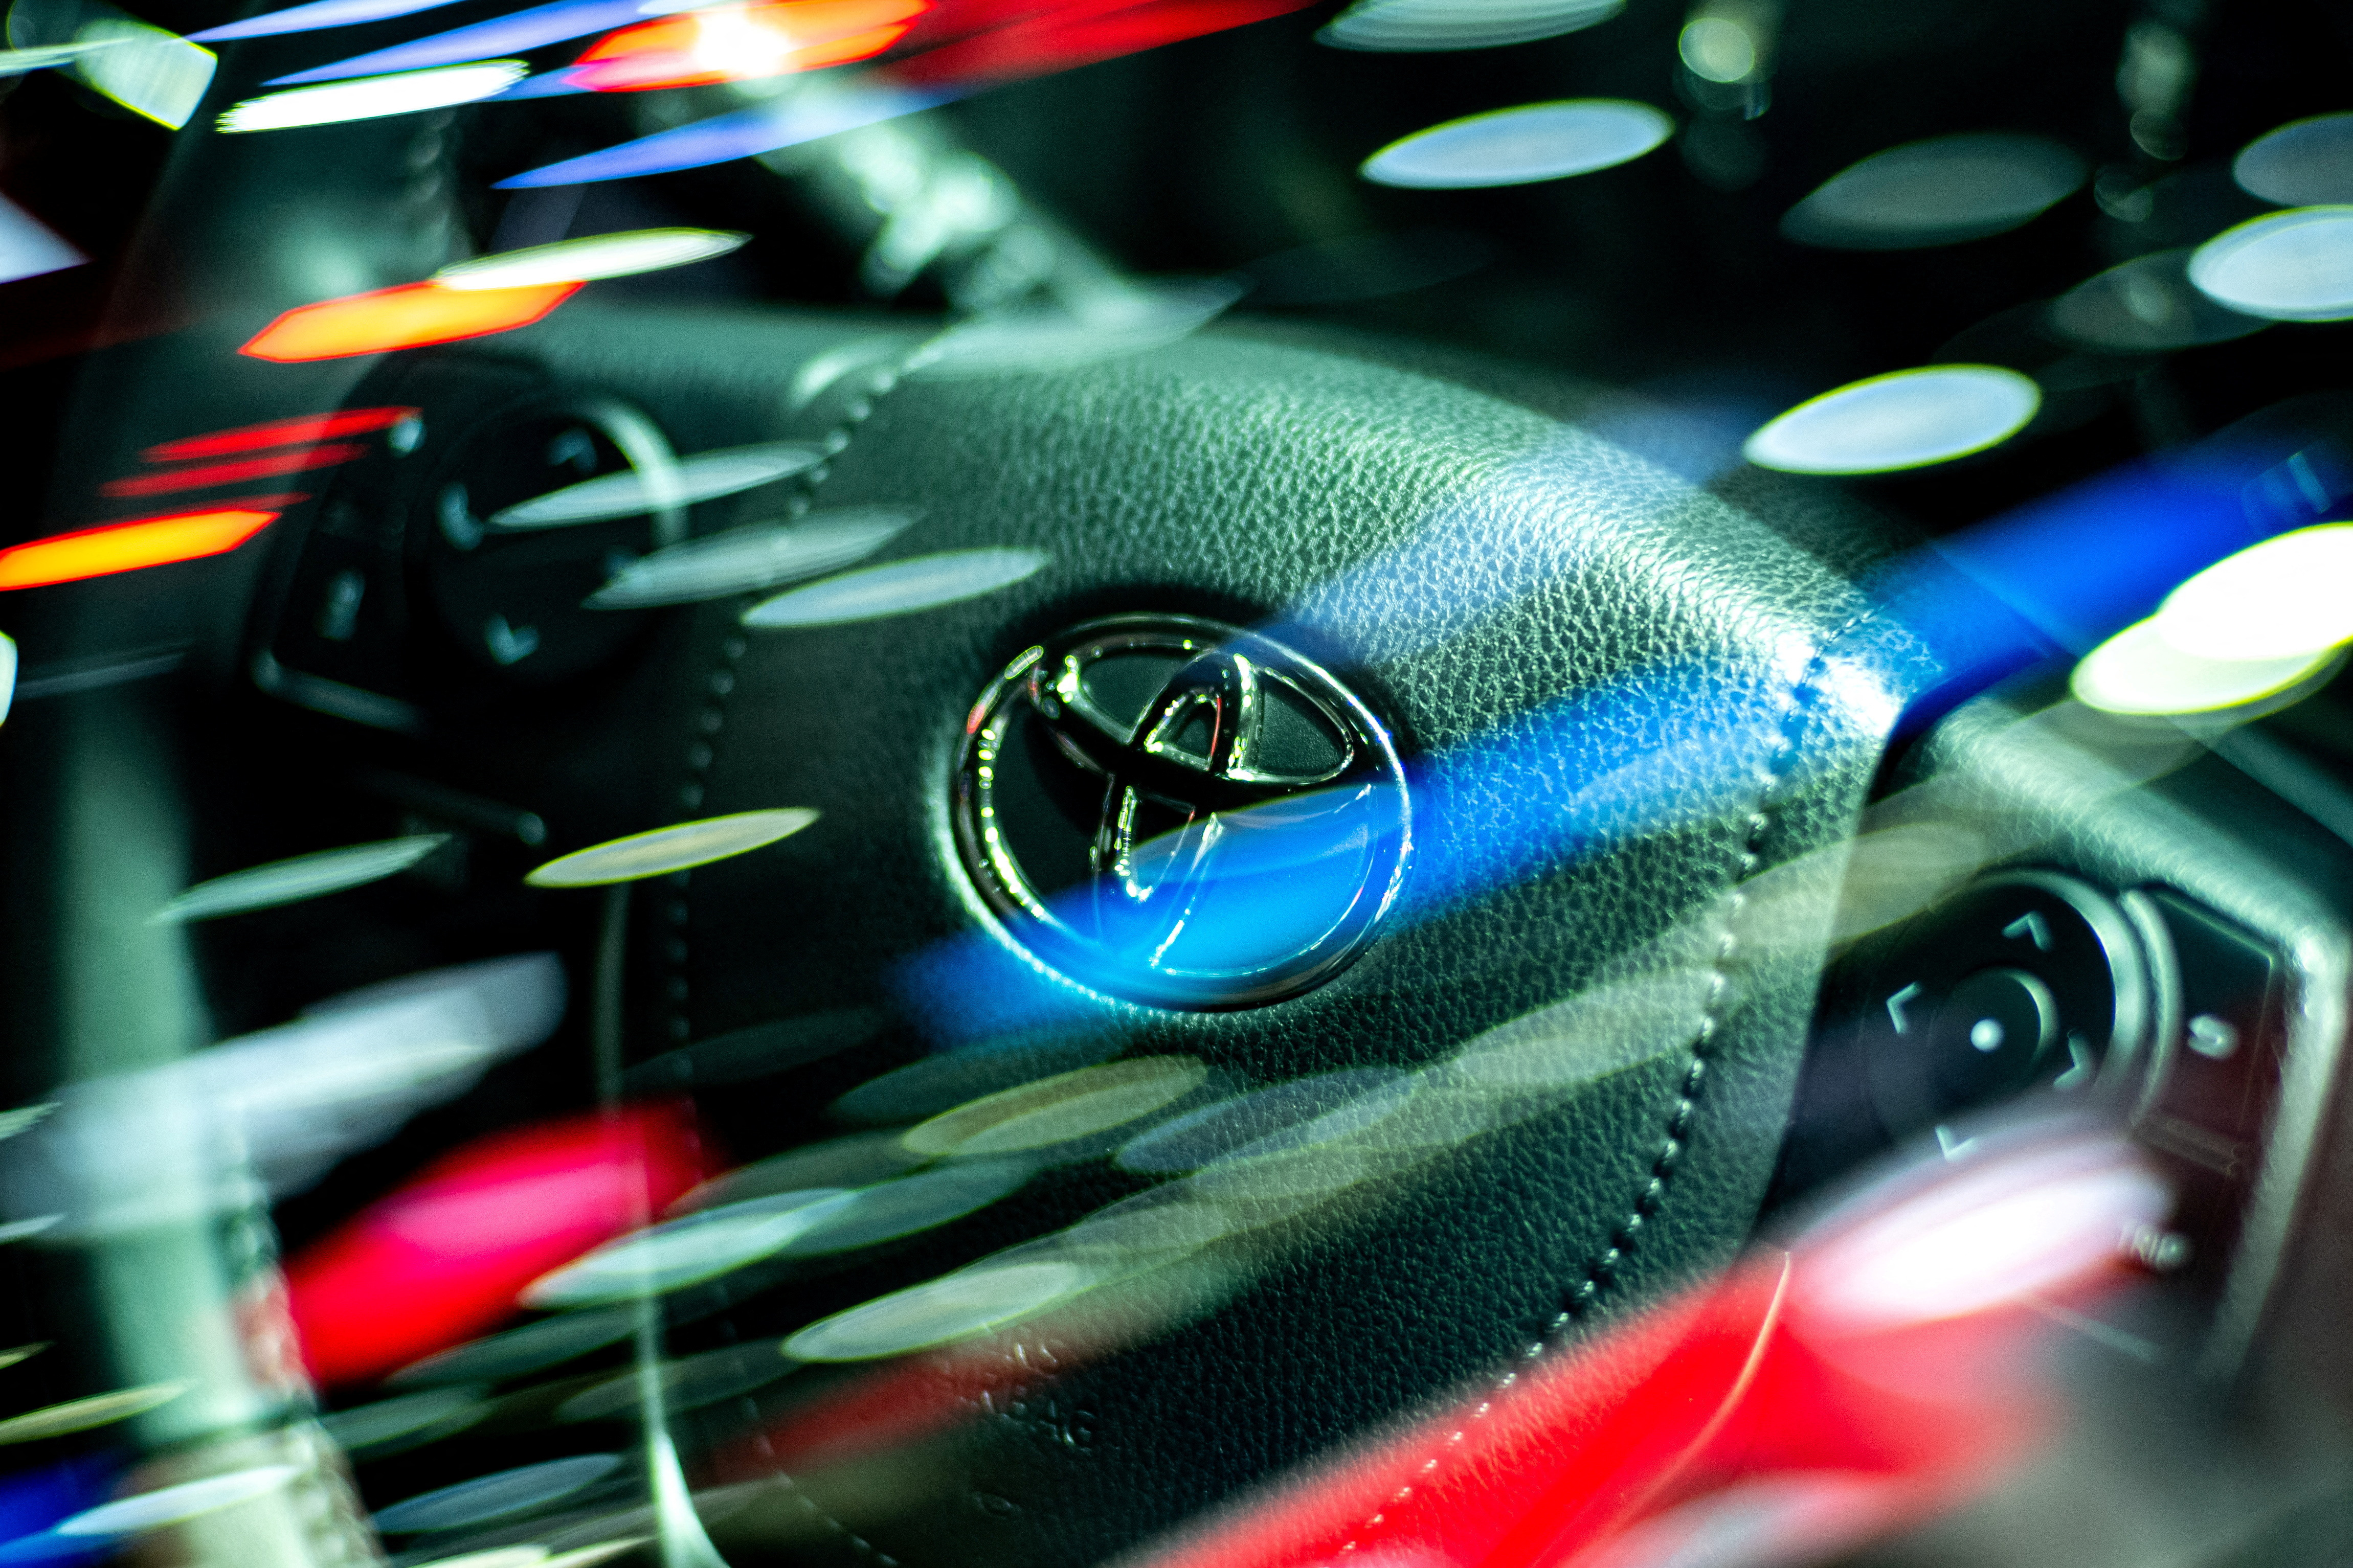 The logo of Toyota Motor is seen on a steering wheel inside a Vios model